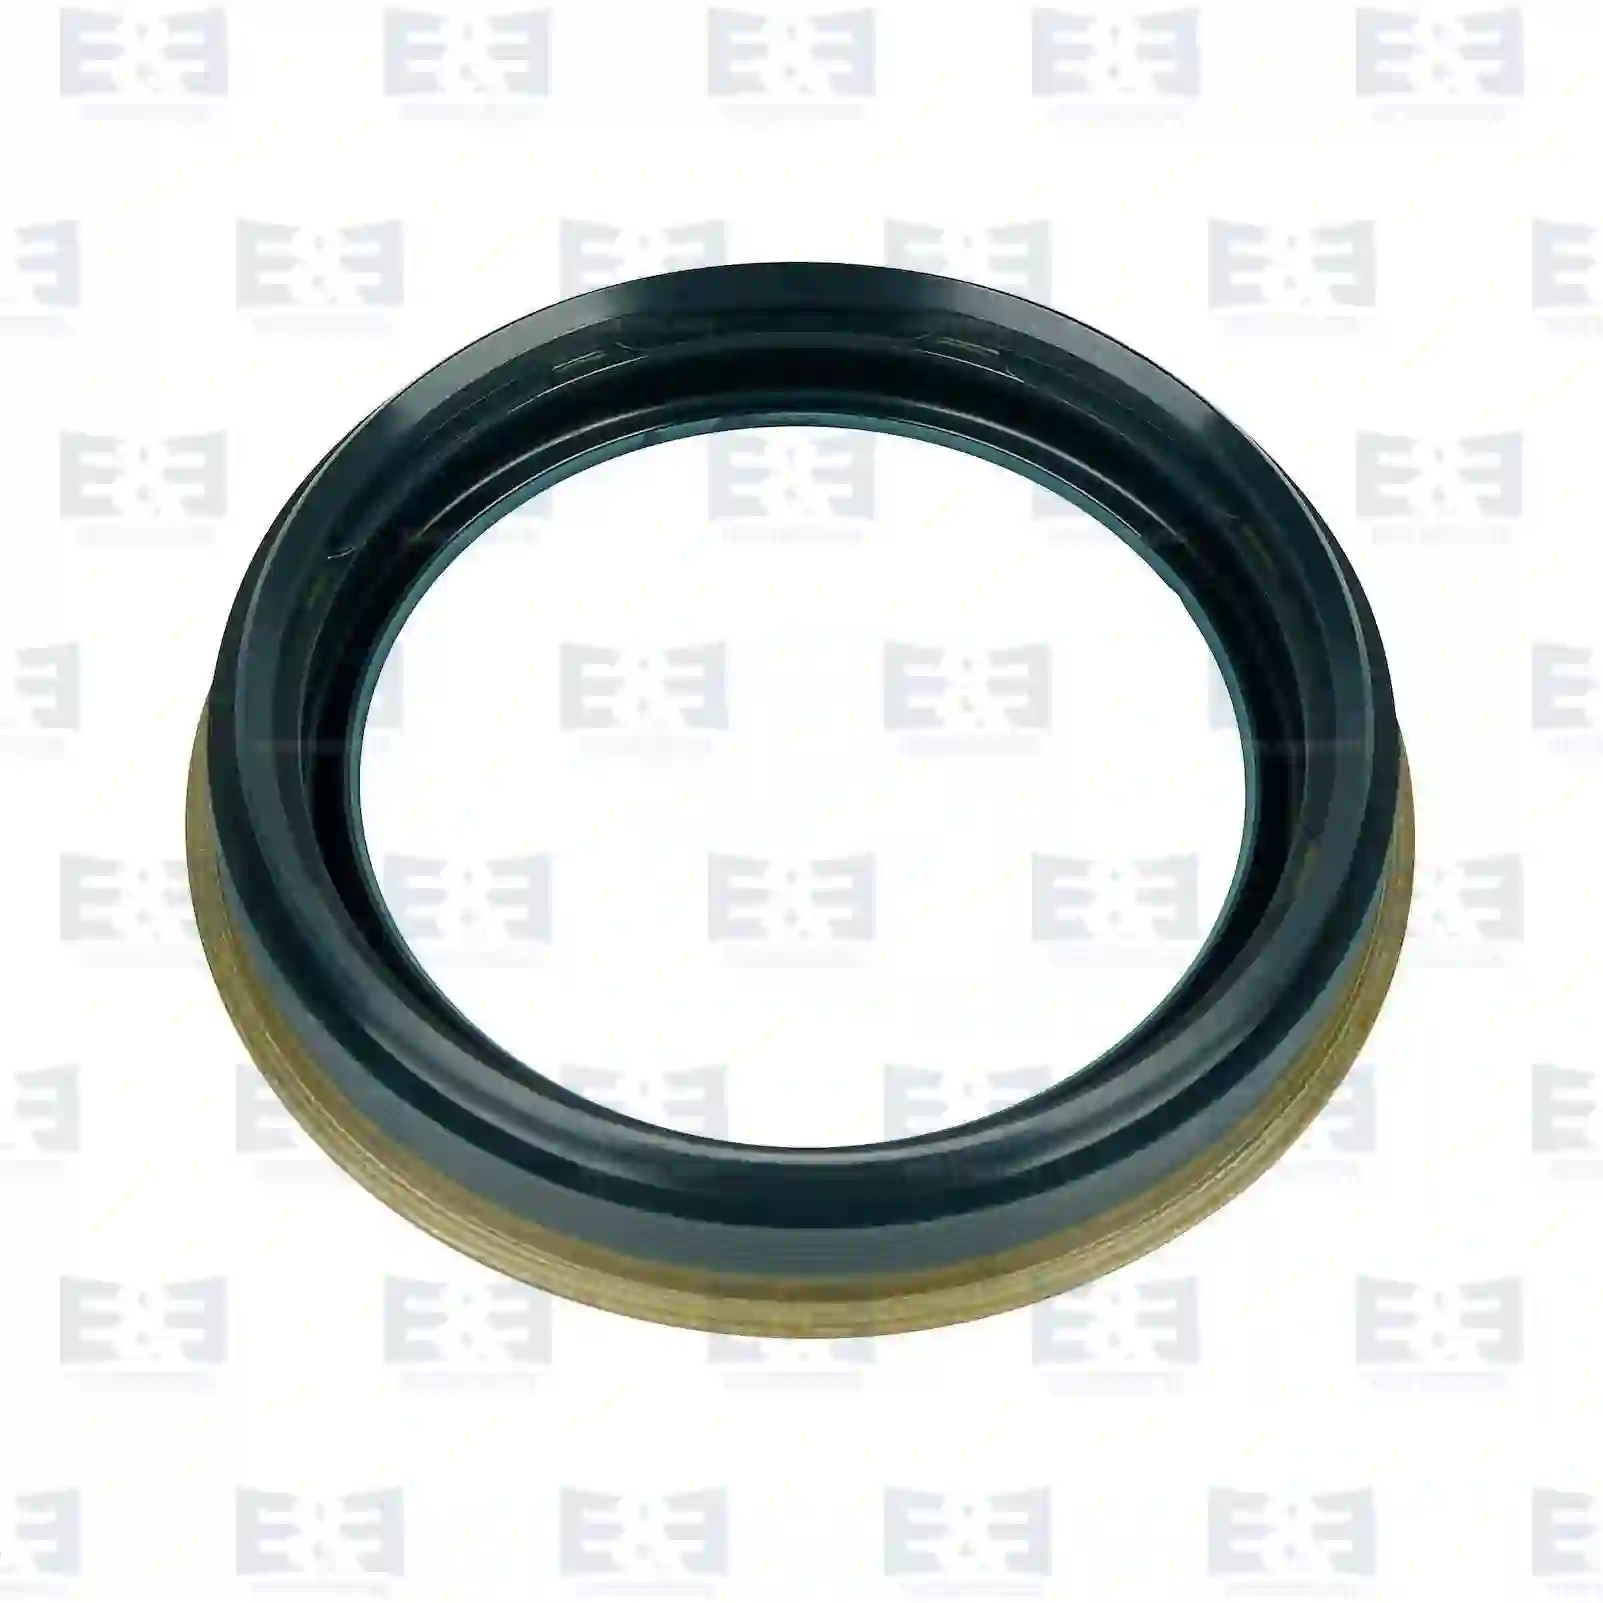 Axles Seal ring, EE No 2E2279721 ,  oem no:1348295, 1357268, 1379477, 1395999, E&E Truck Spare Parts | Truck Spare Parts, Auotomotive Spare Parts